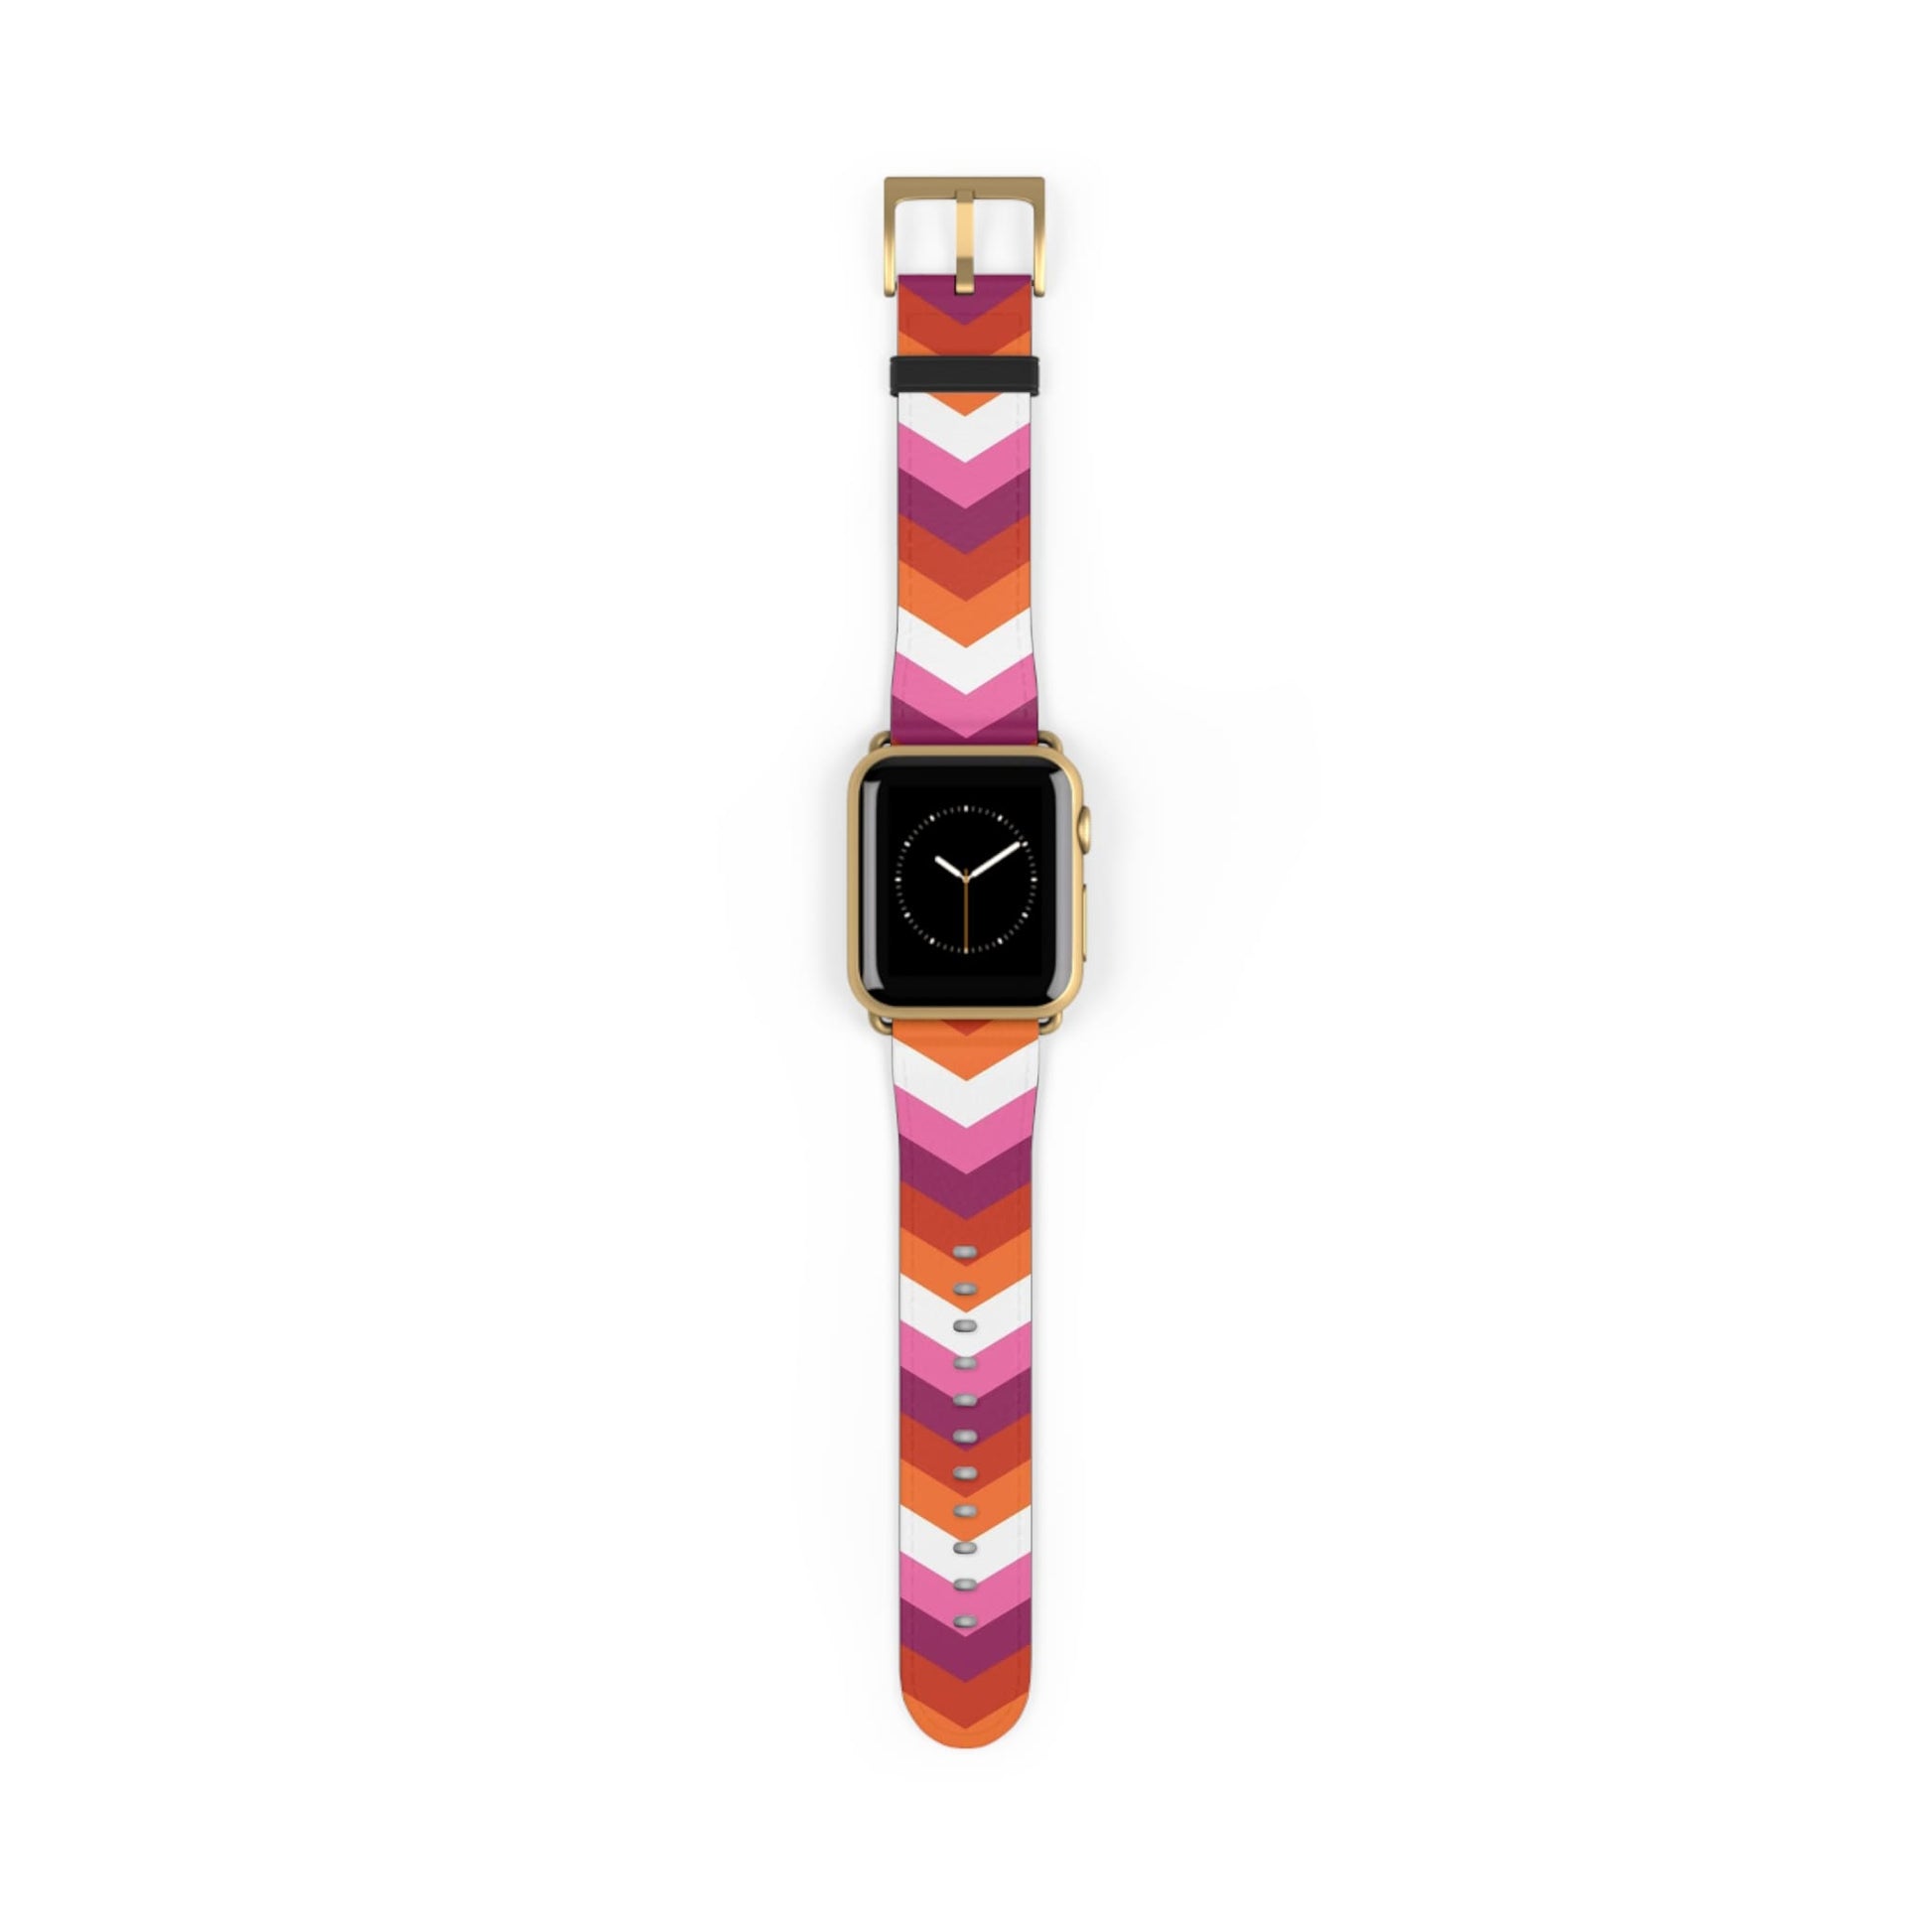 lesbian apple watch band, discreet chevron pattern, gold